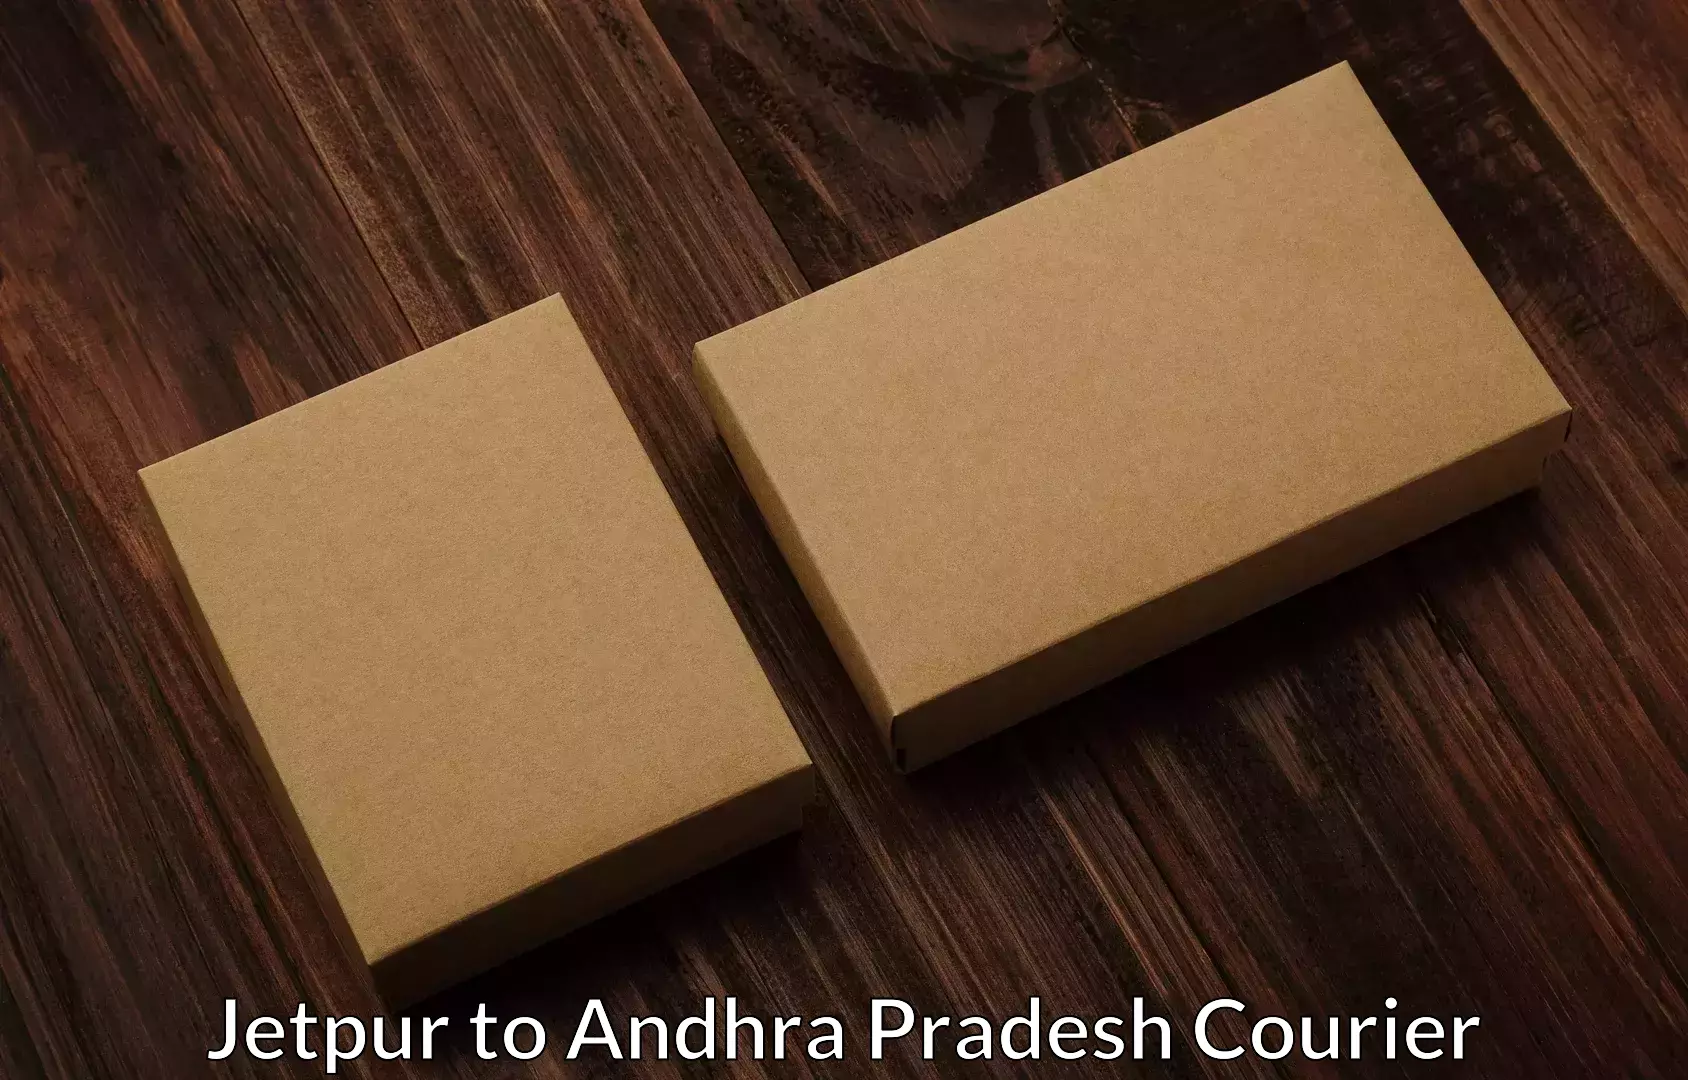 Professional moving company Jetpur to Andhra Pradesh